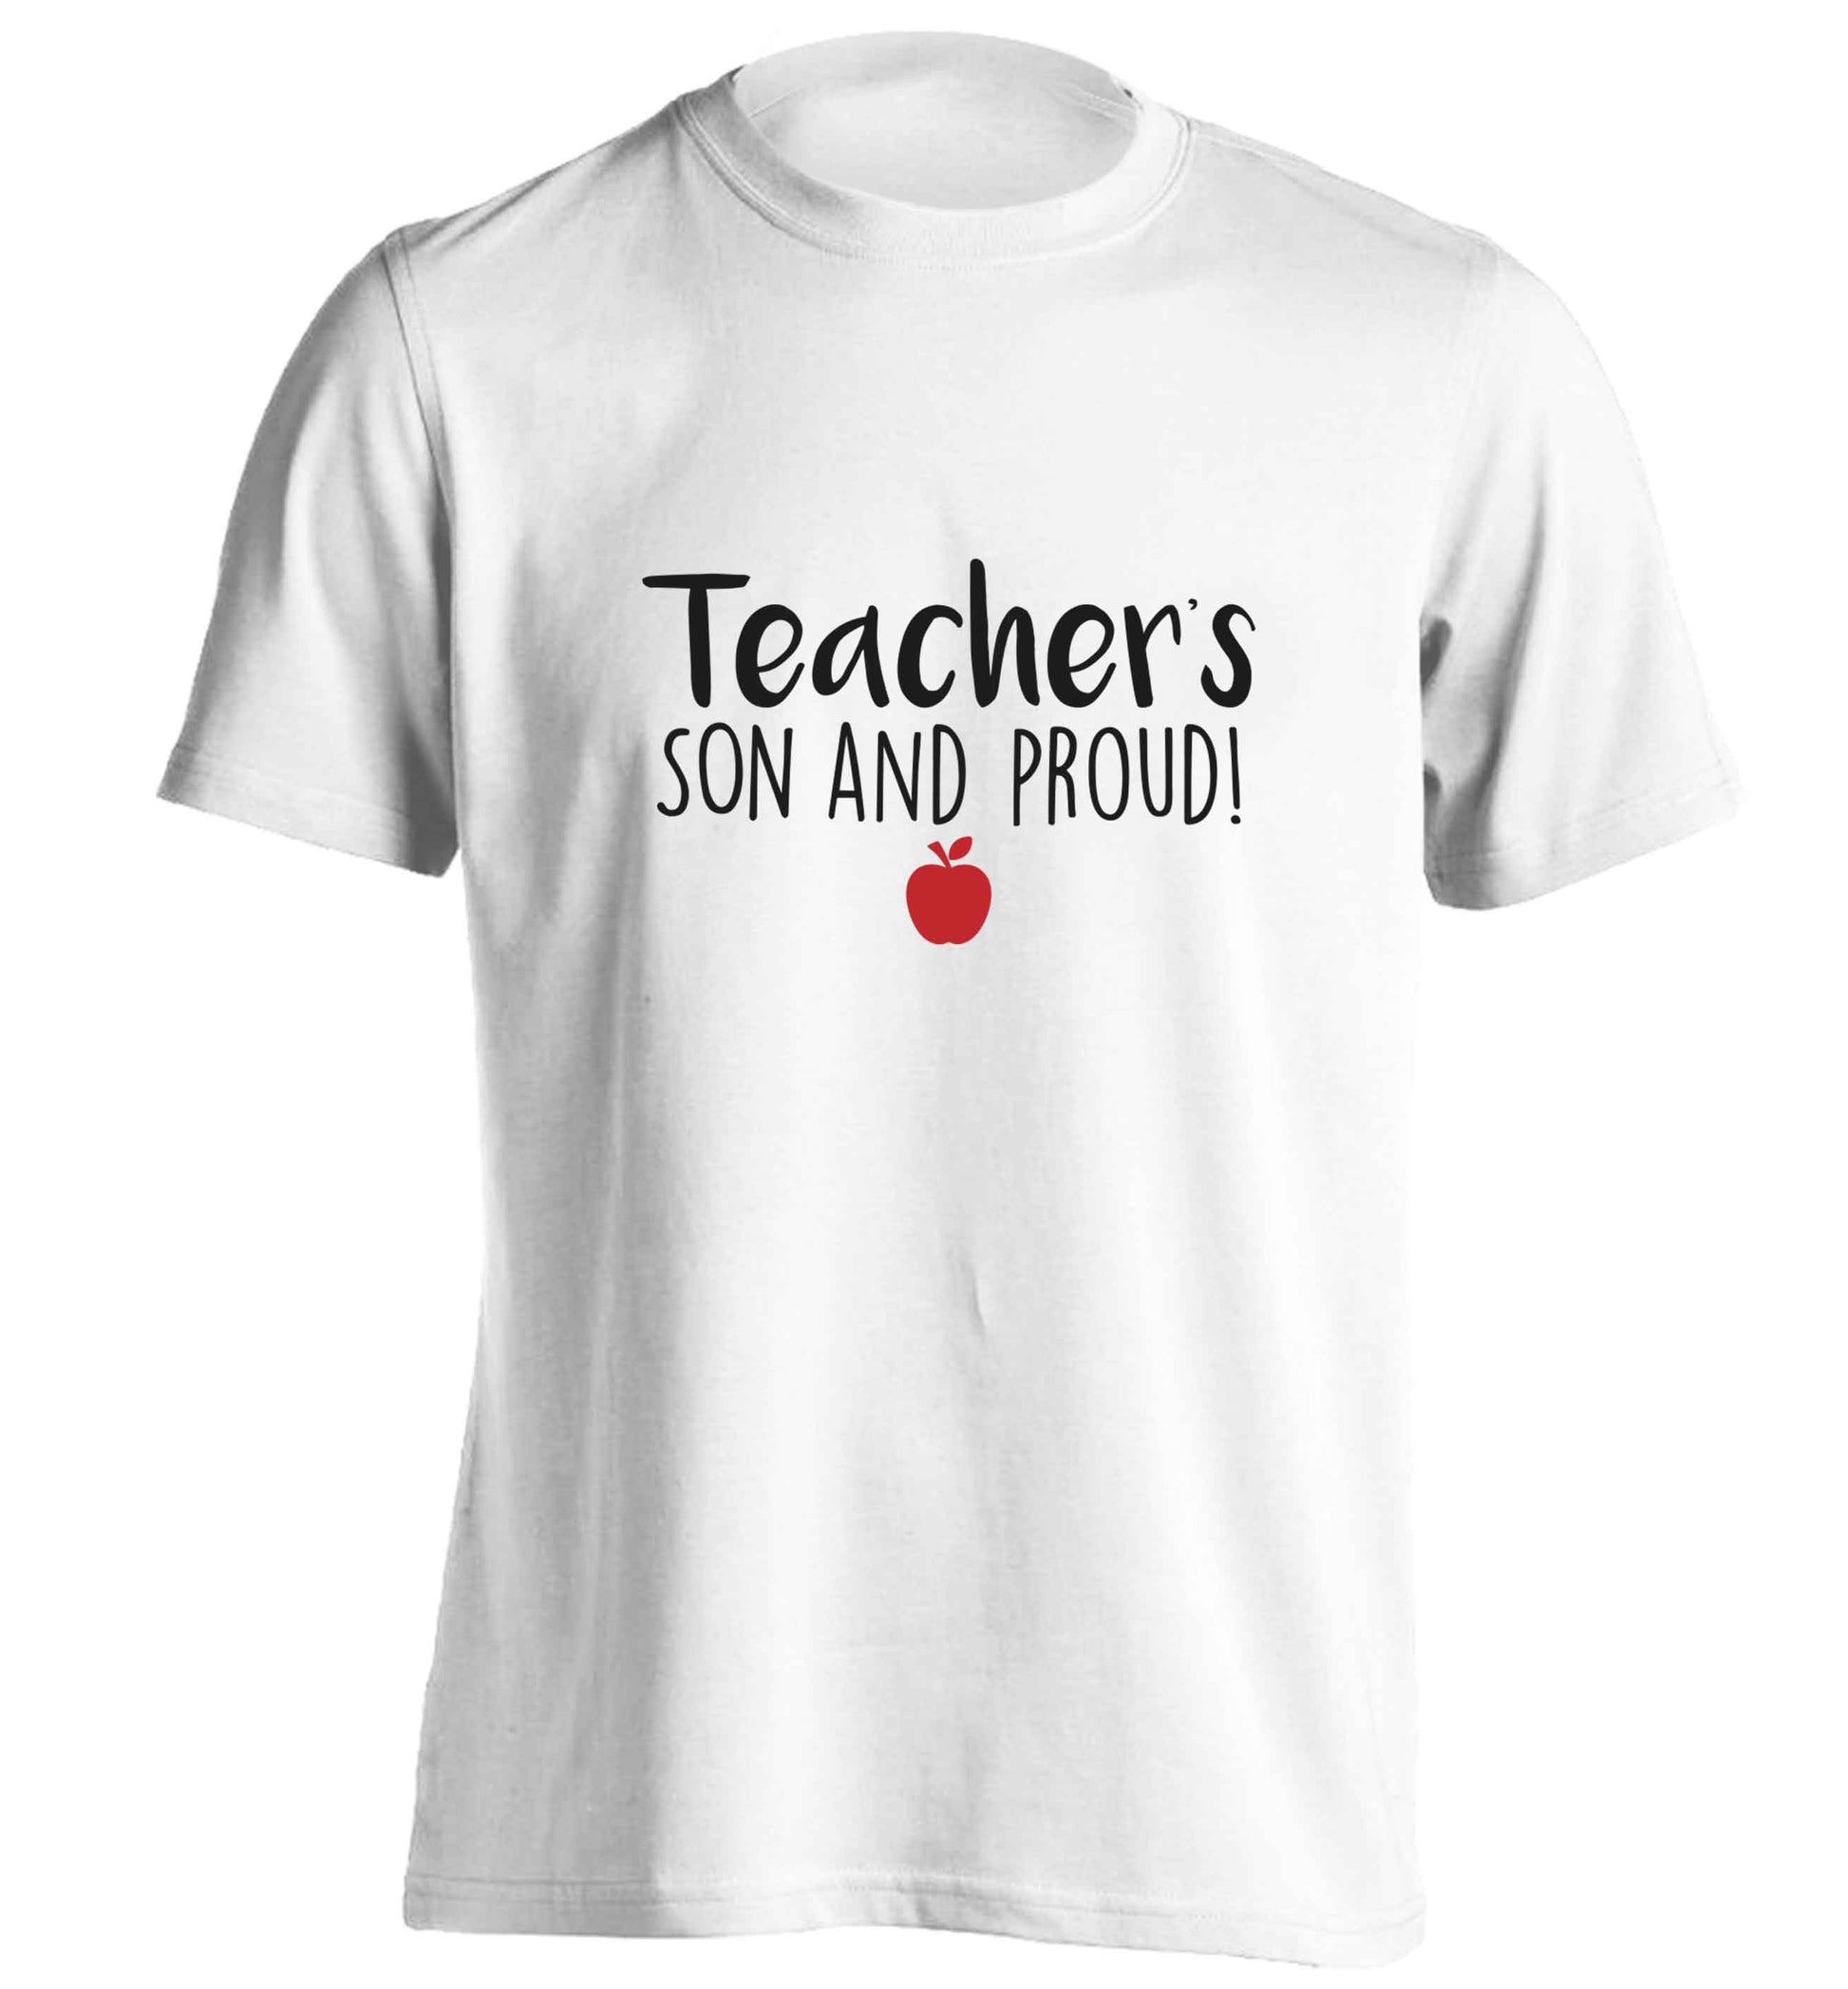 Teachers son and proud adults unisex white Tshirt 2XL